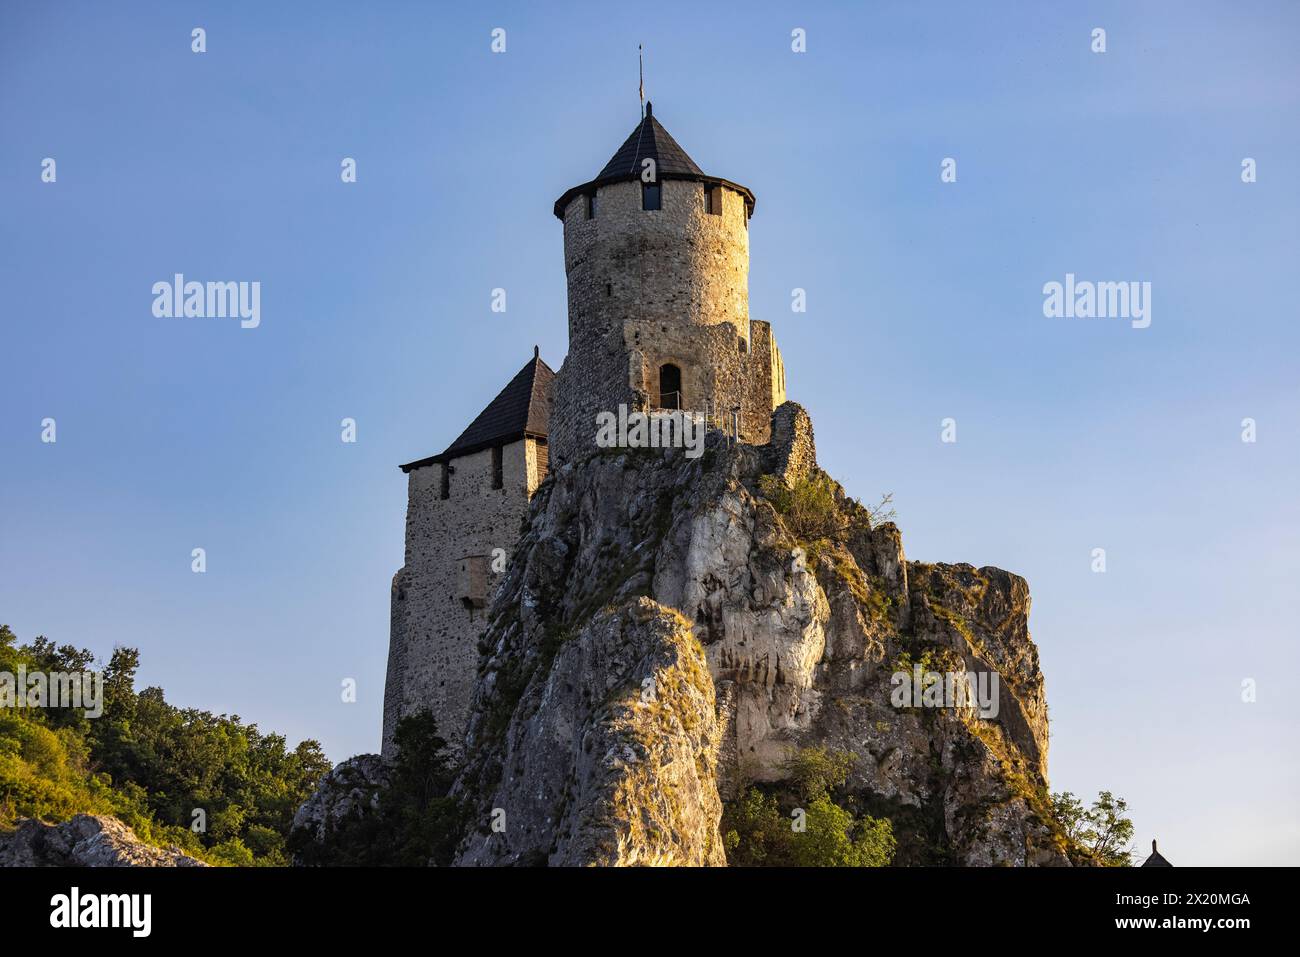 Tower of the Golubac Fortress in the Iron Gates gorge of the Danube, Golubac, Braničevo, Serbia, Europe Stock Photo